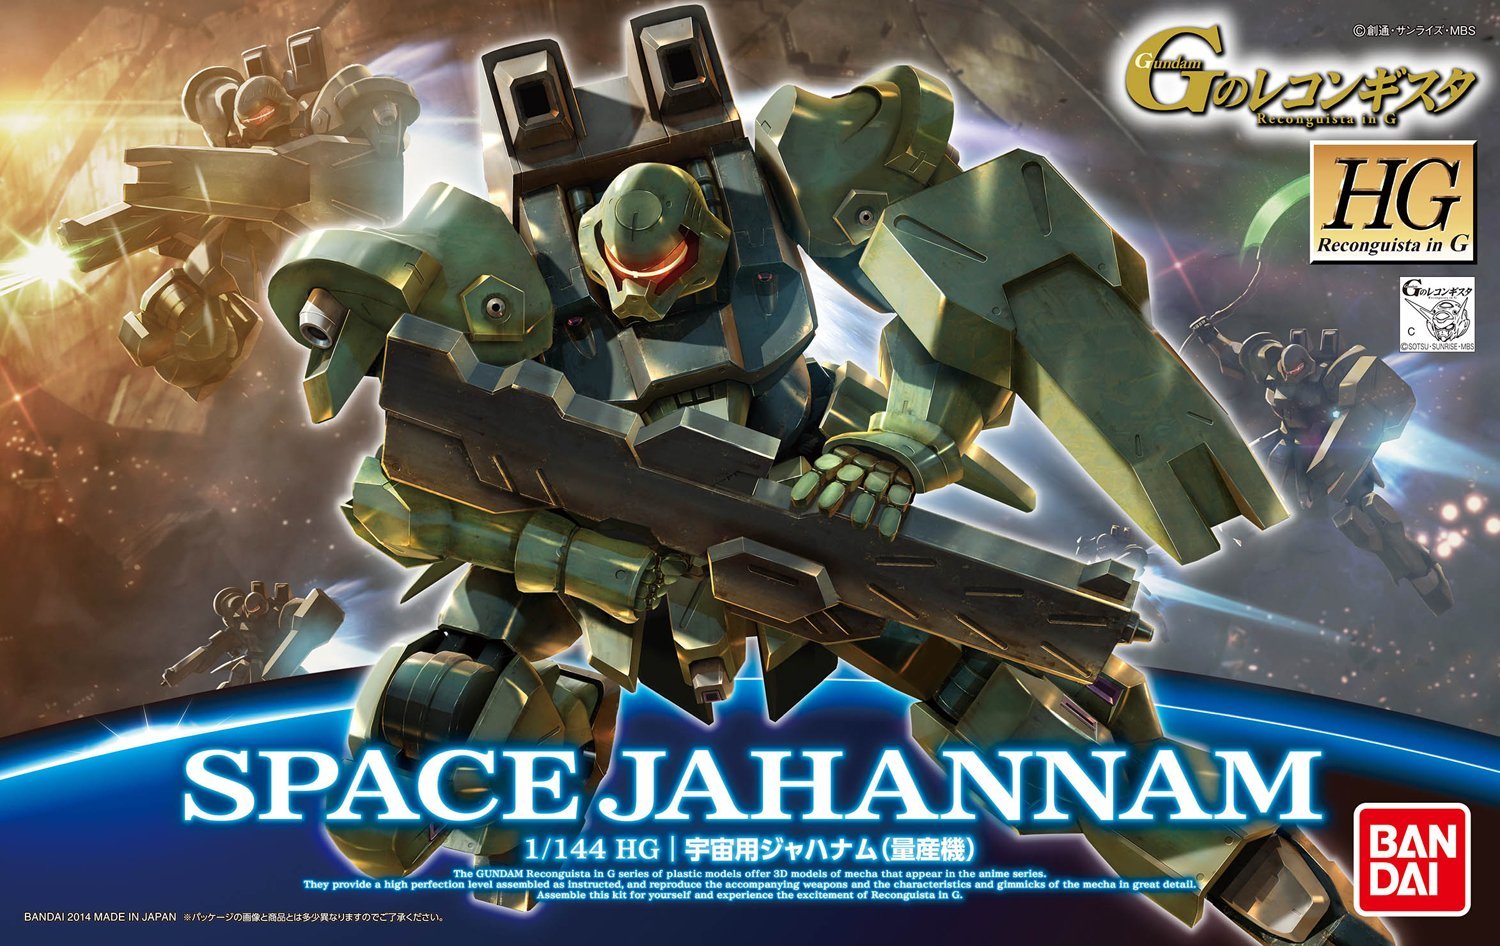 Gundam 1/144 HG Reconguista G #06 Space Jahannam Model Kit